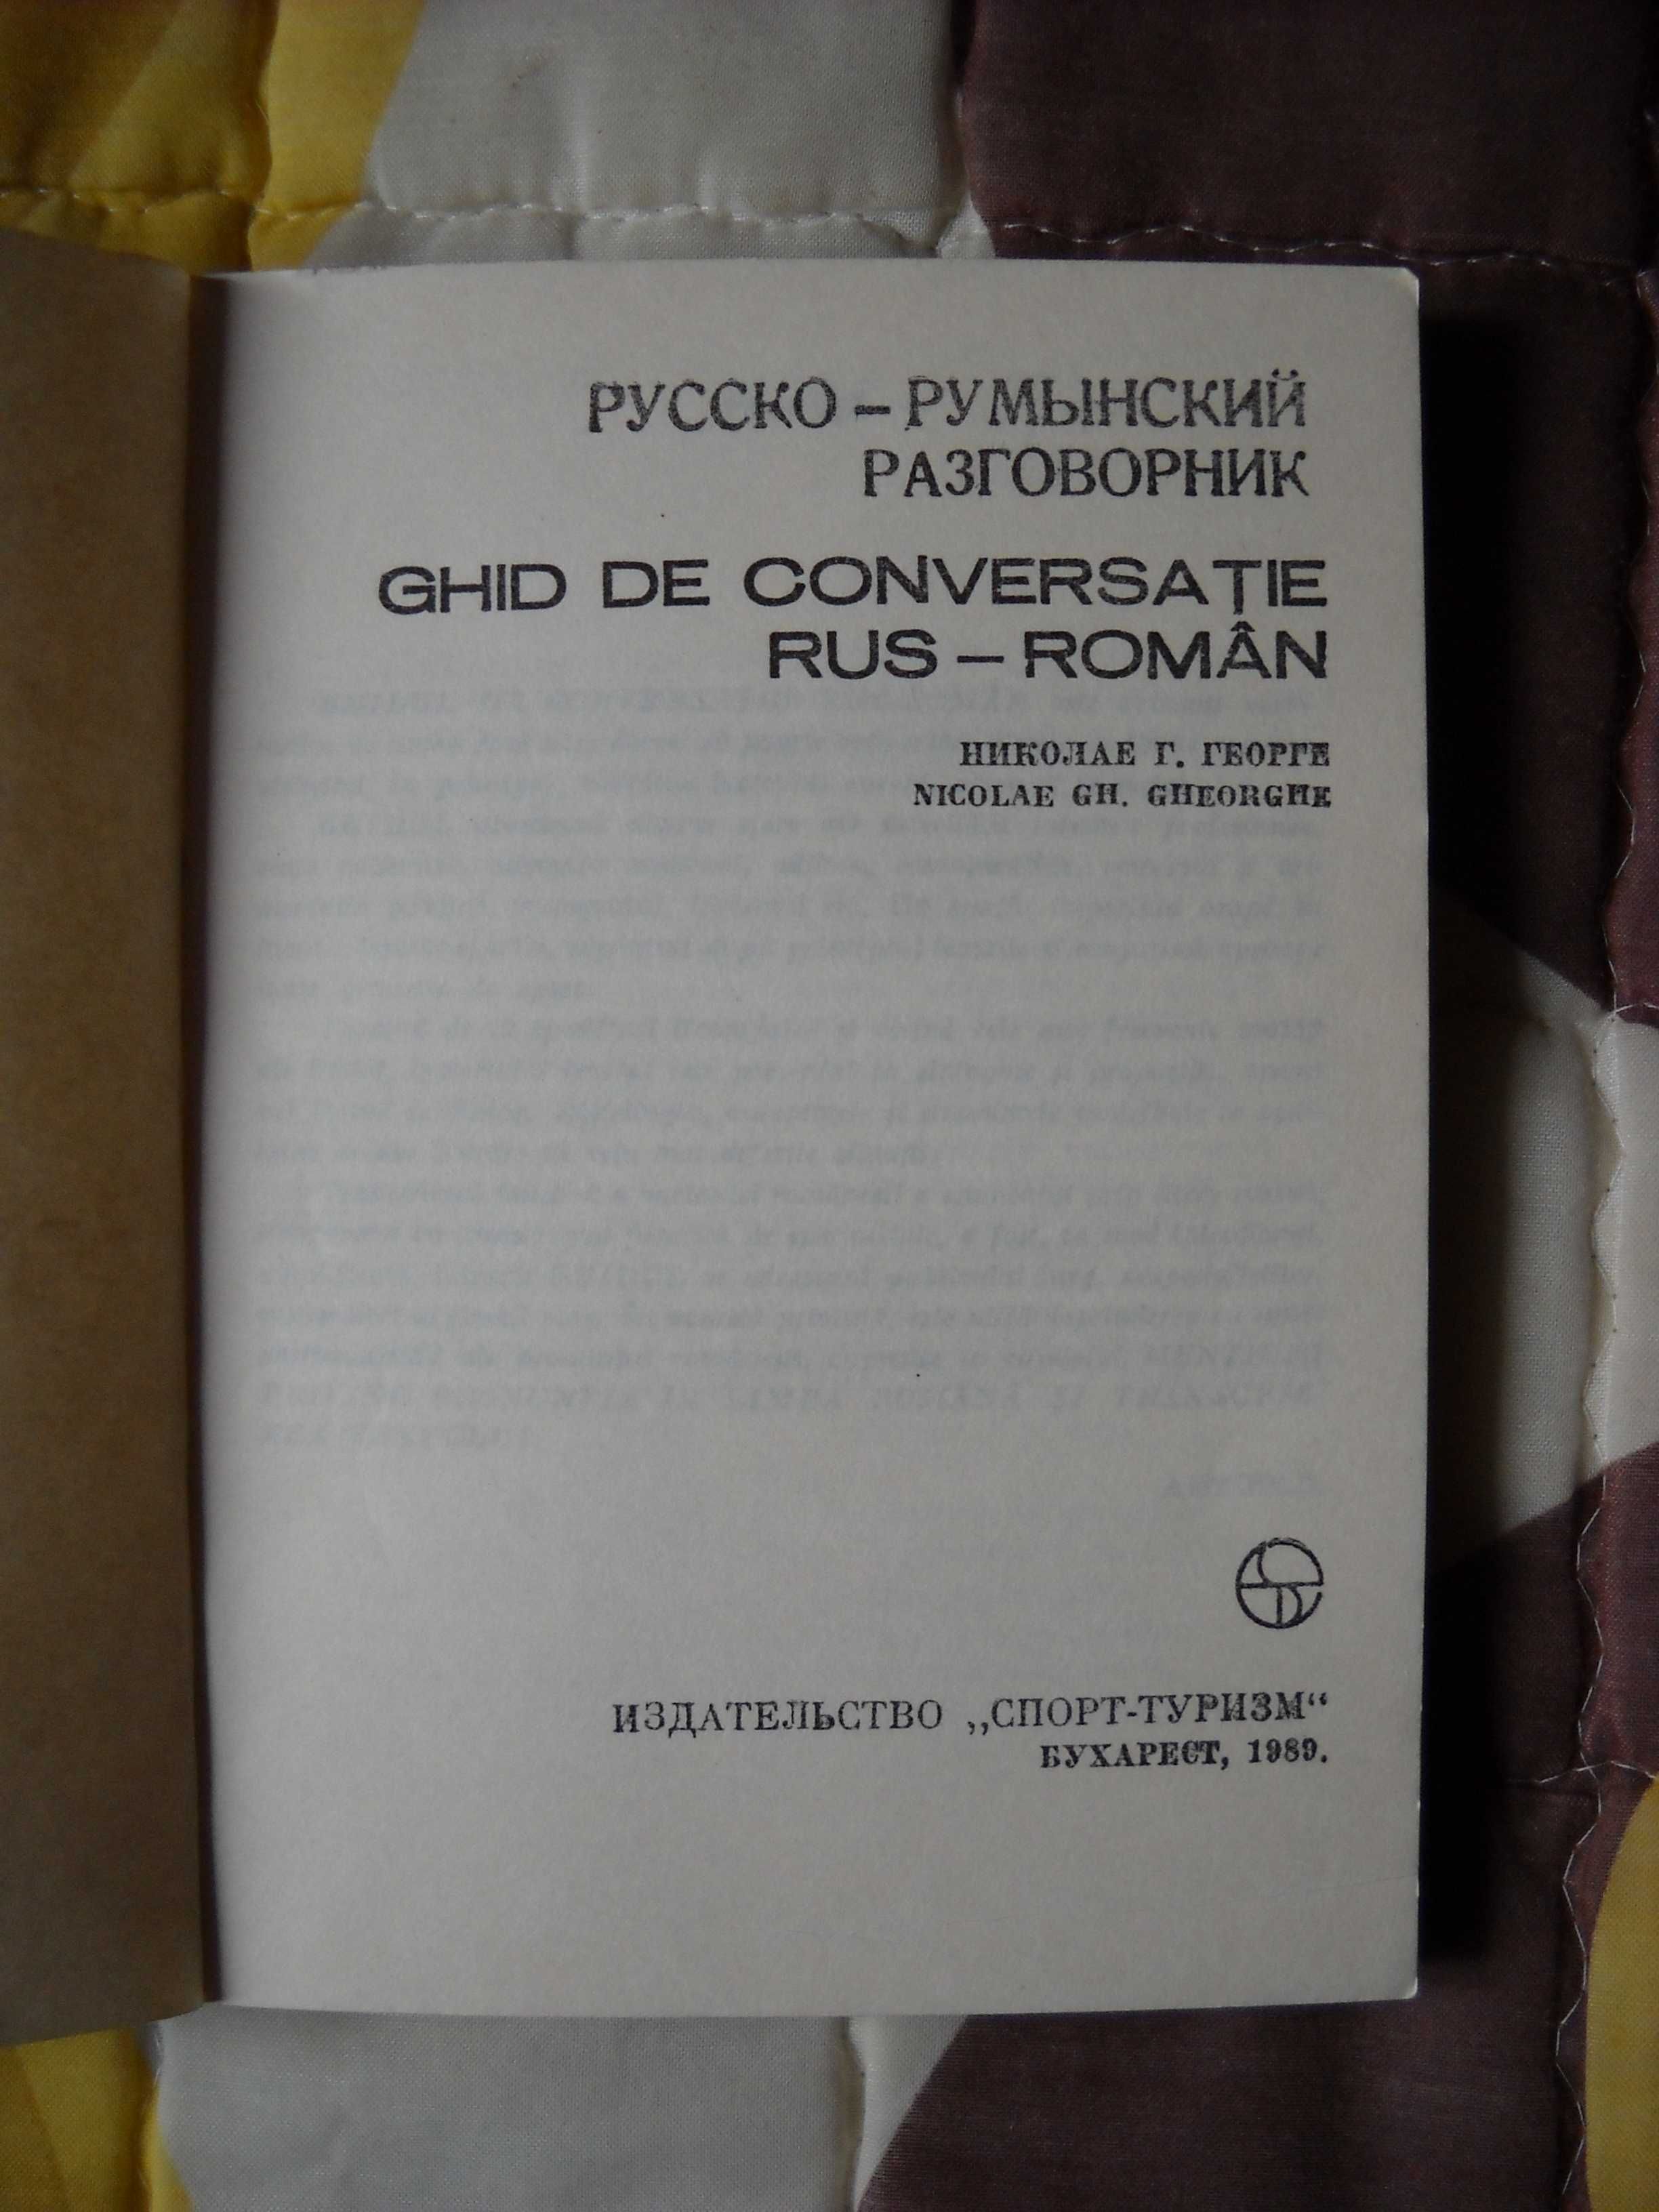 Ghid de conversatie rus-roman / Dictionar rus-roman / Curs limba rusa